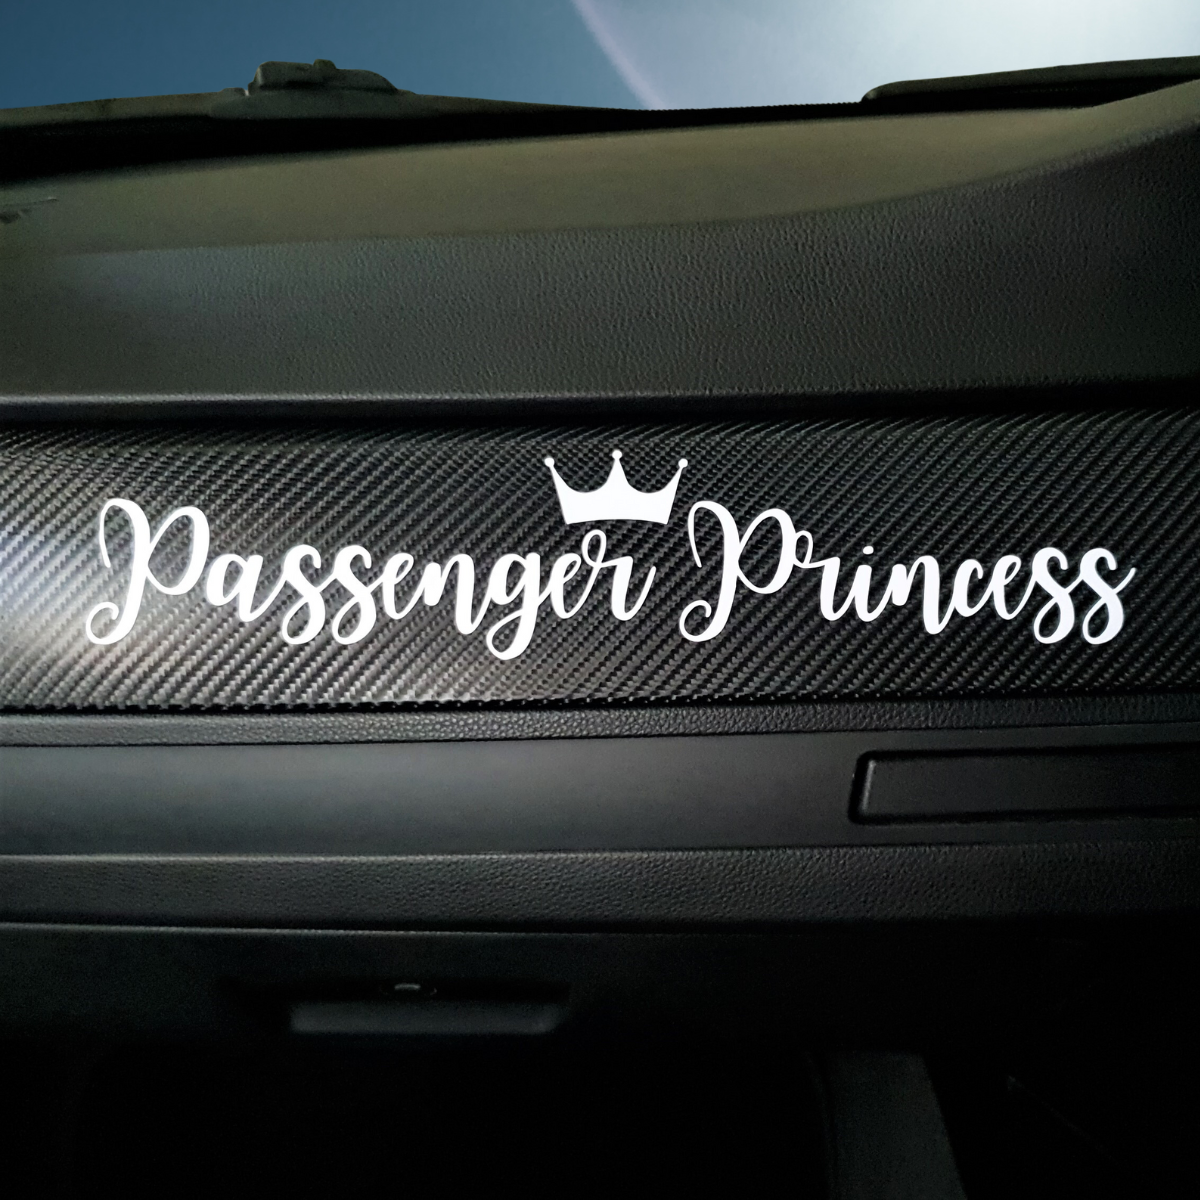 Passenger Princess